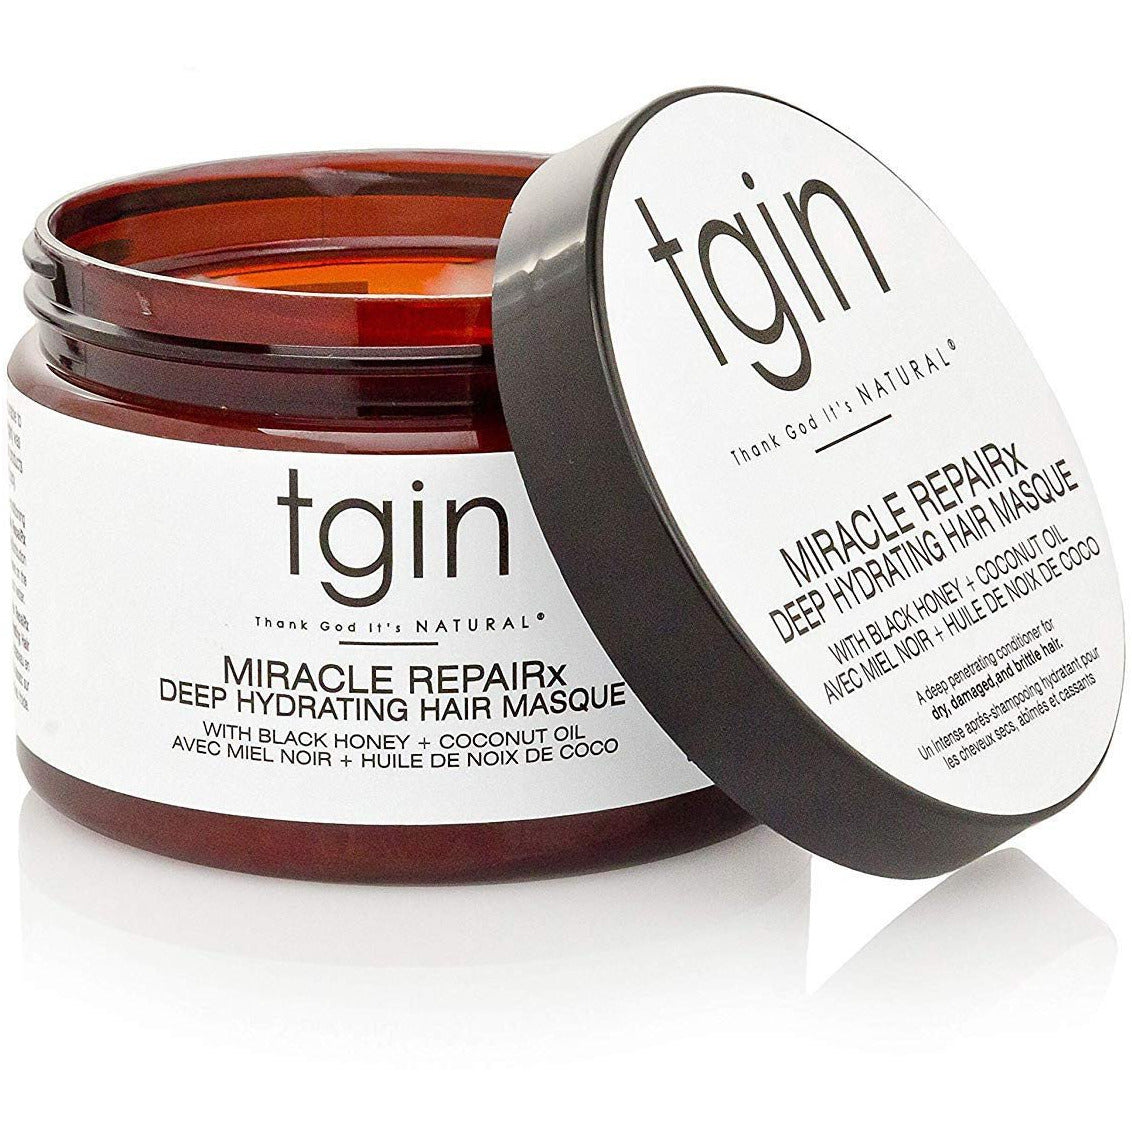 TGIN - Miracle RepaiRx Deep Hydrating Hair Masque